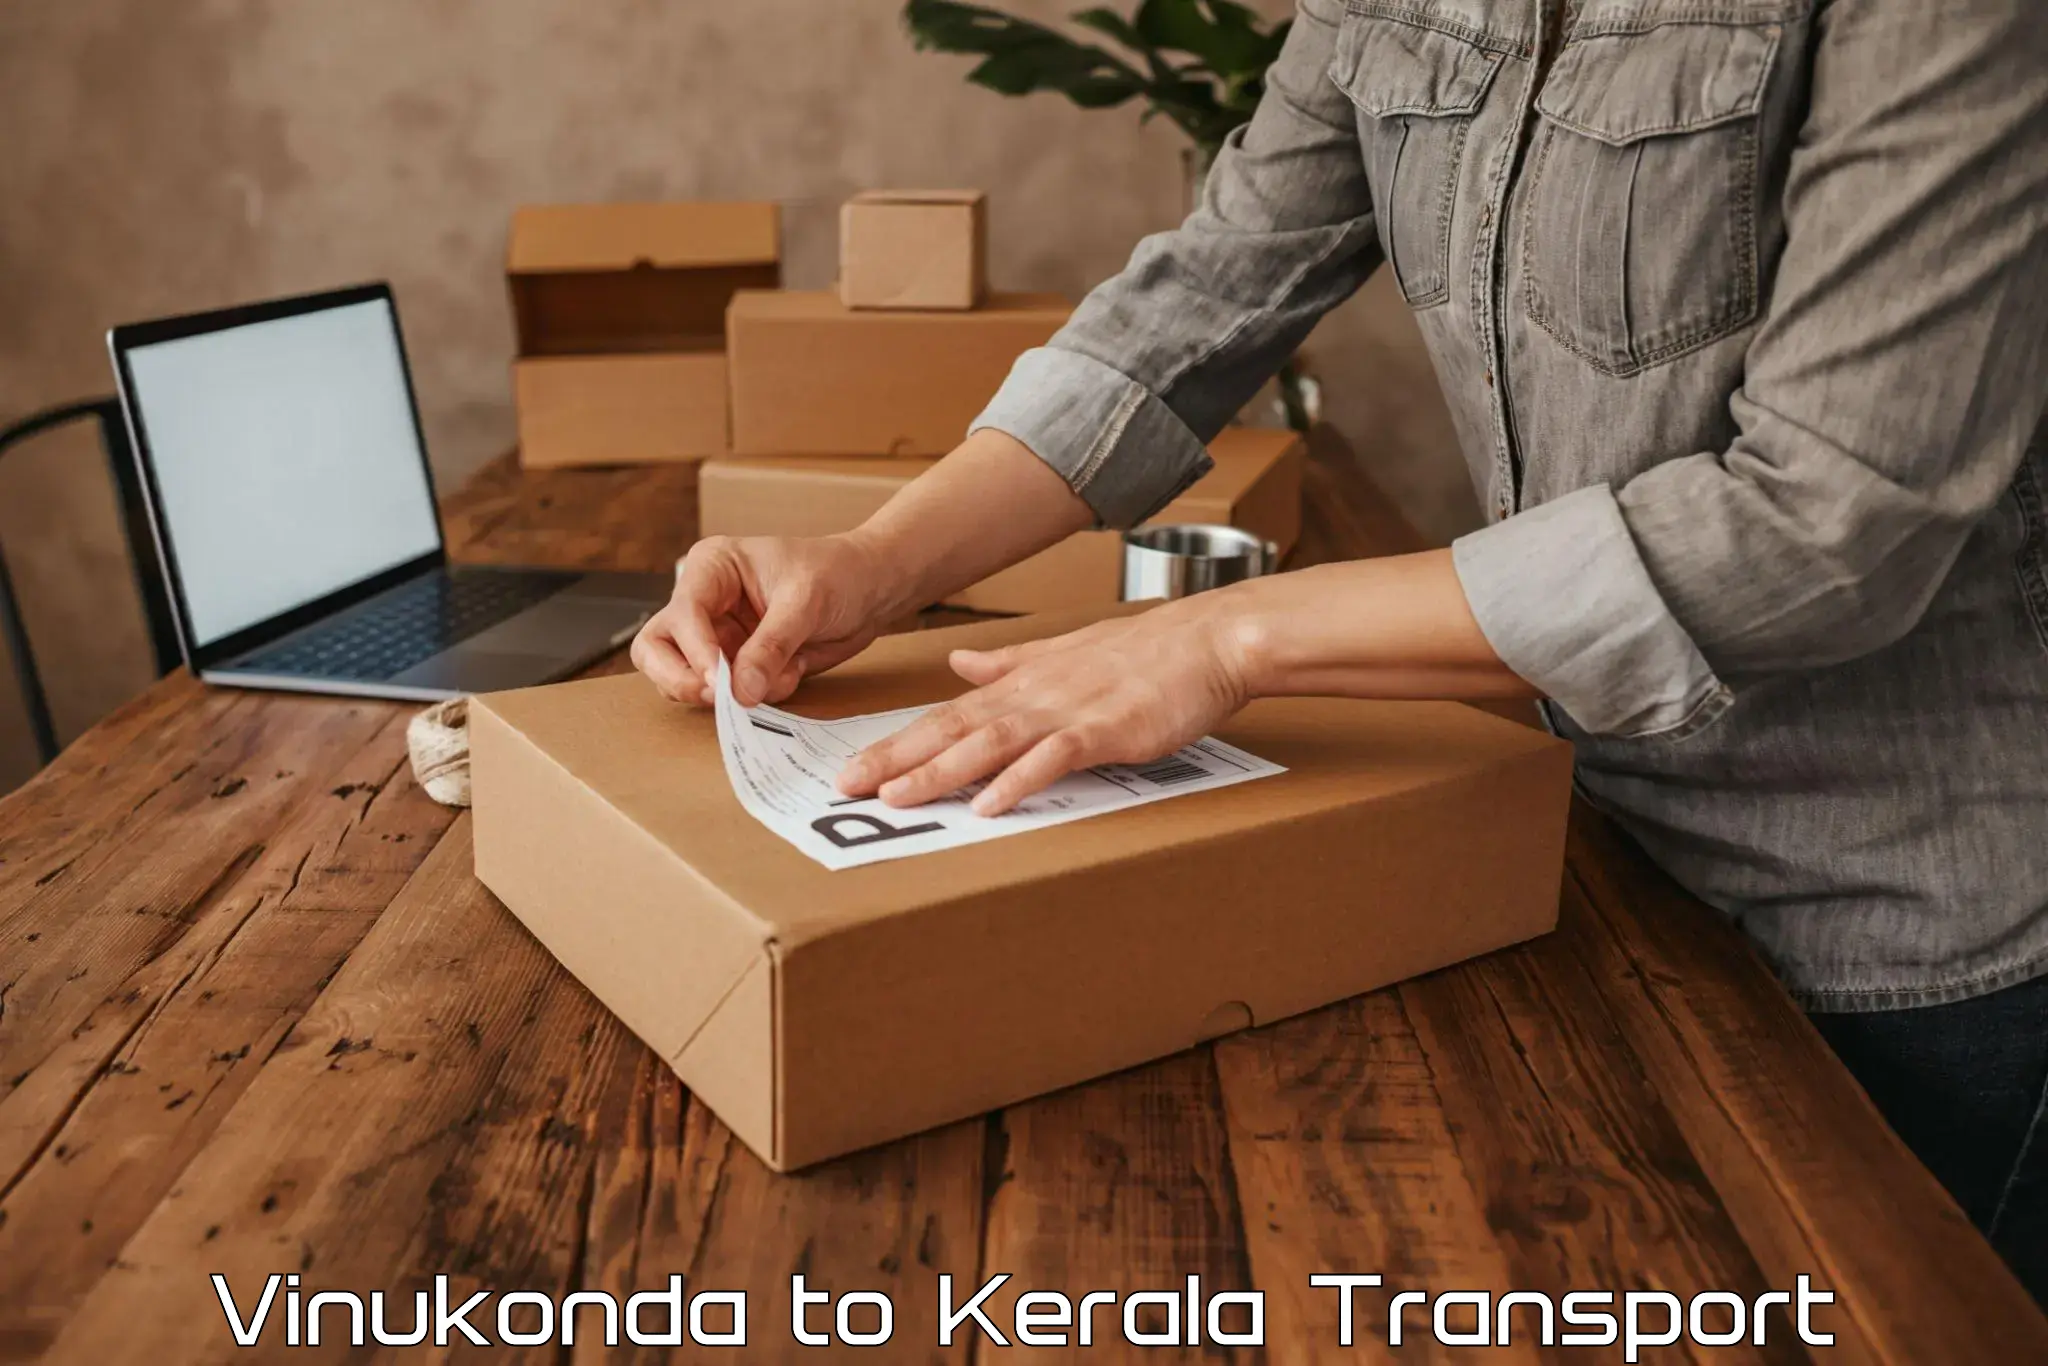 Delivery service Vinukonda to Kochi